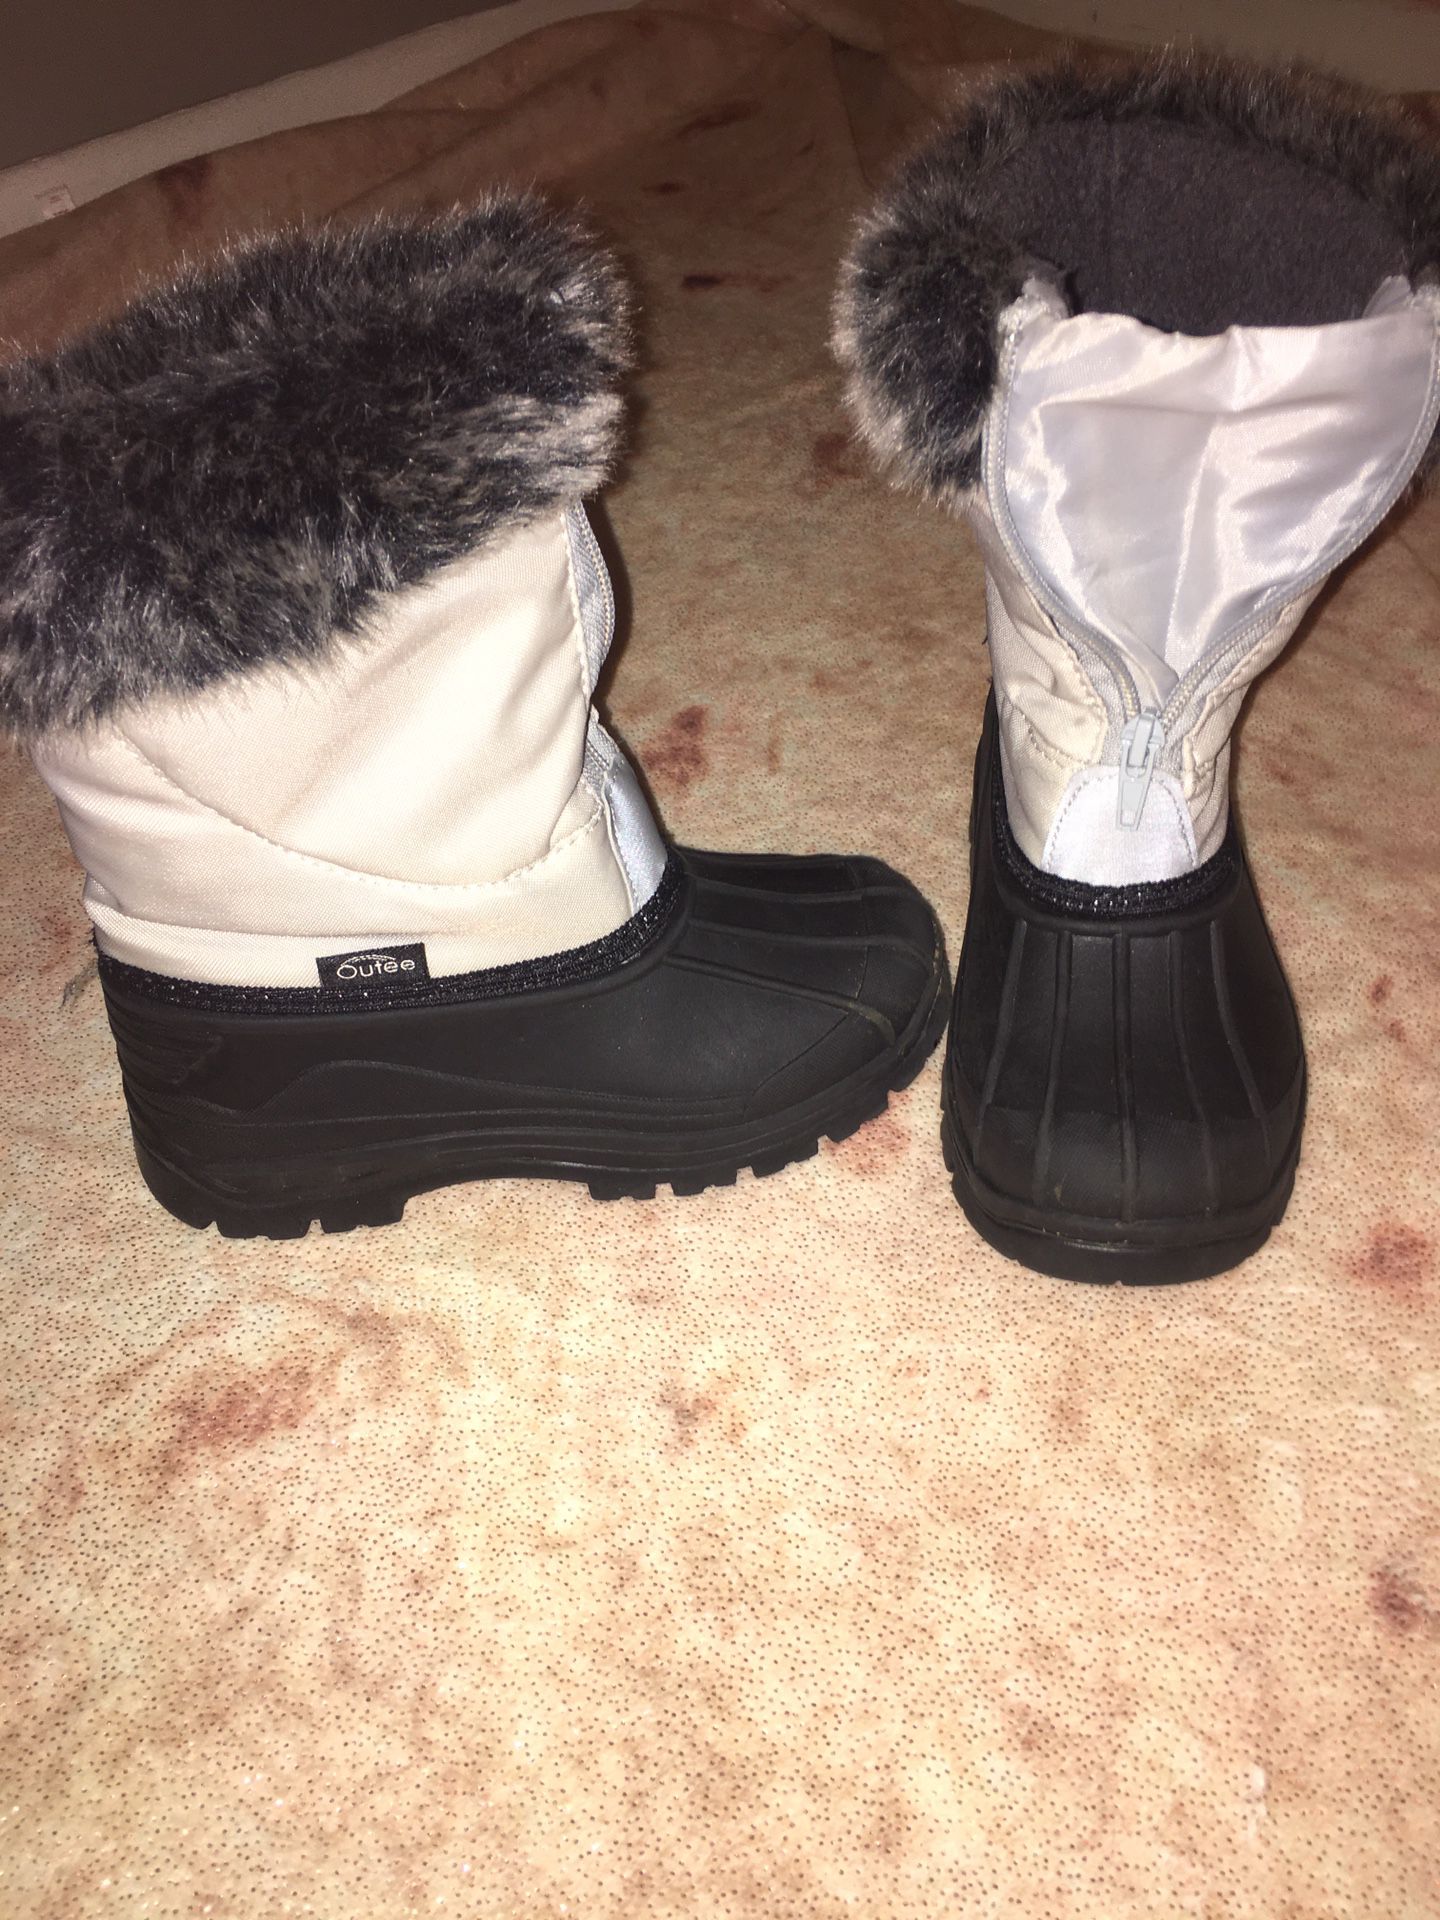 Snow boots kids size:13